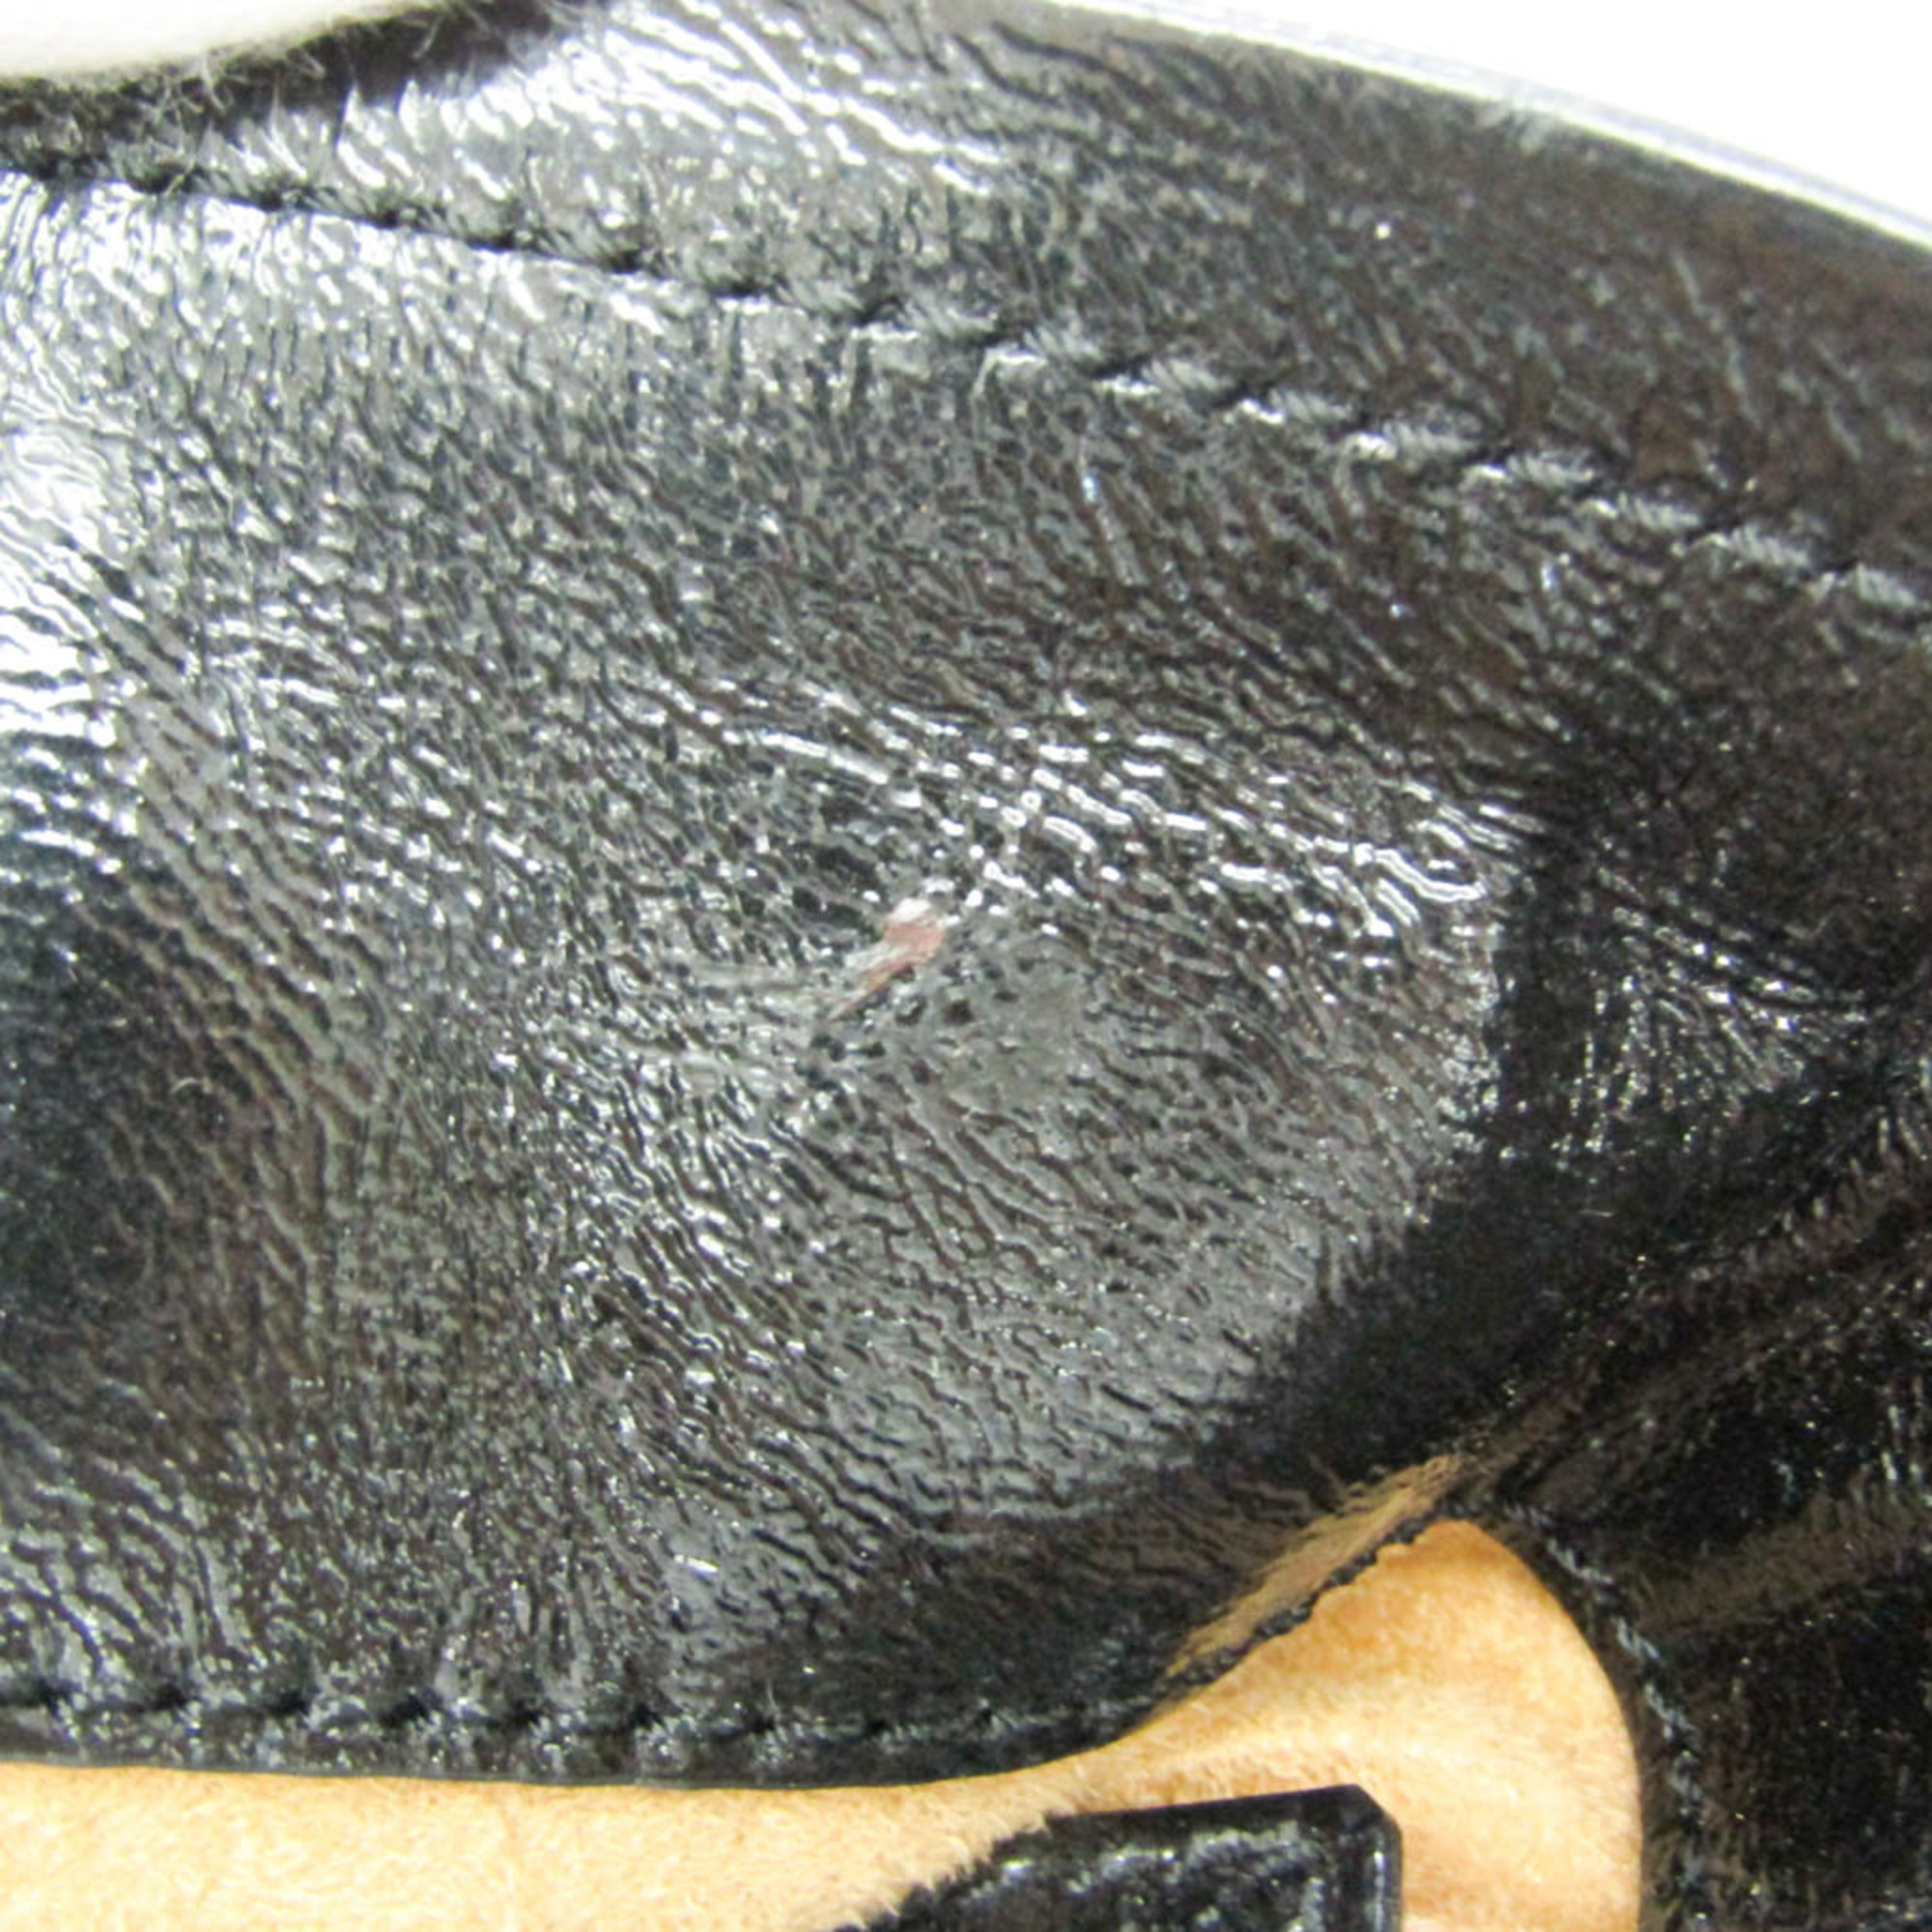 Jimmy Choo Women's Leather Studded Tote Bag Black